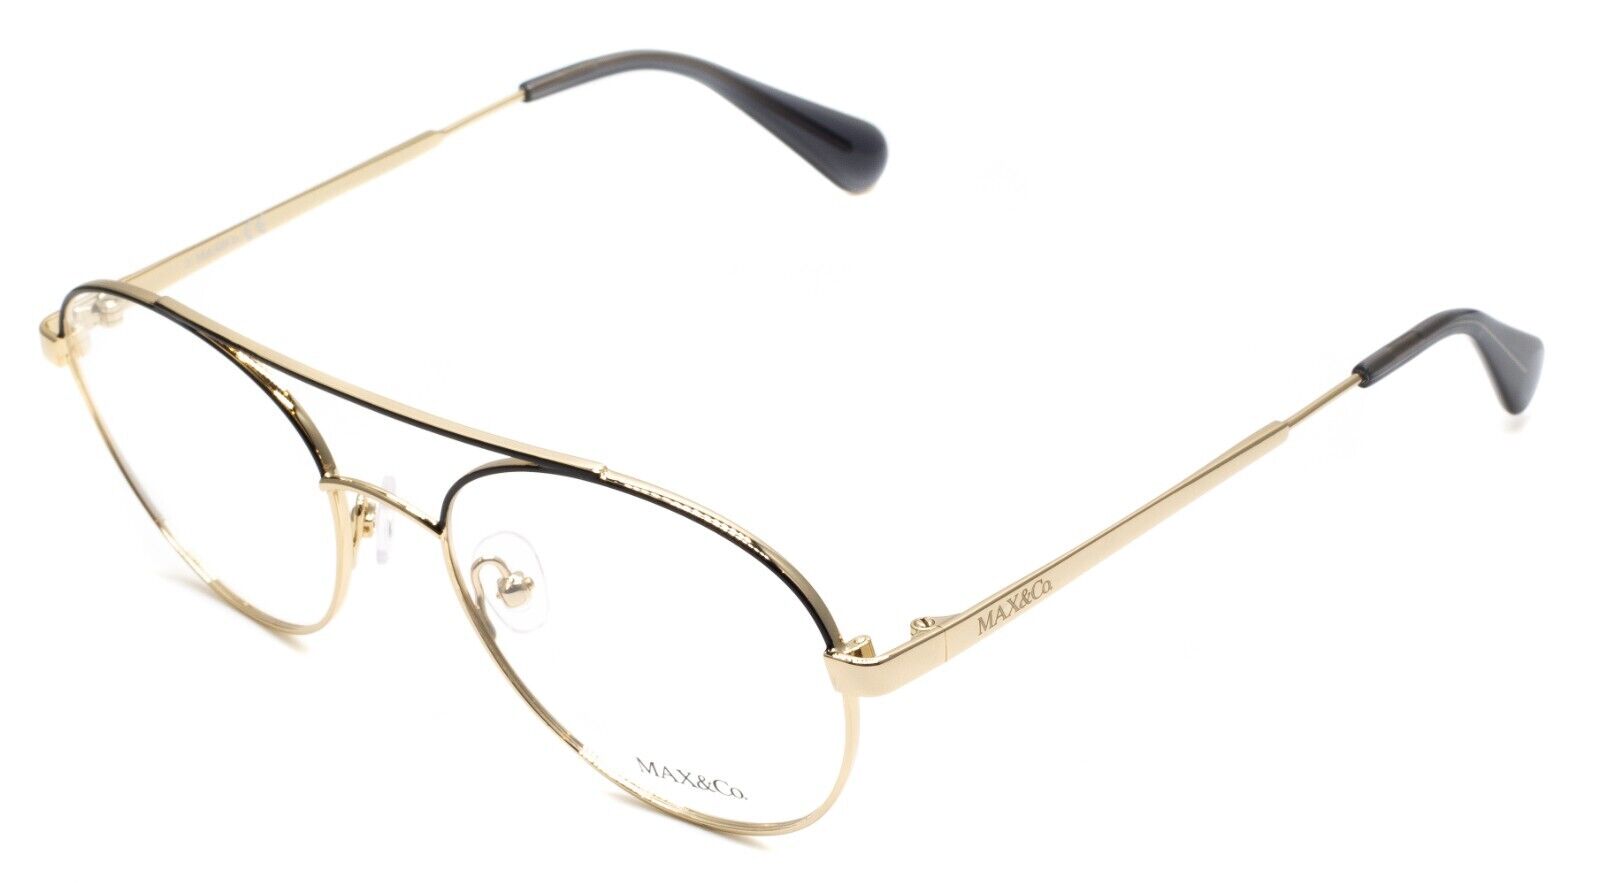 MAX & CO MO5005 032 51mm Eyewear FRAMES RX Optical Glasses Eyeglasses - New  - GGV Eyewear